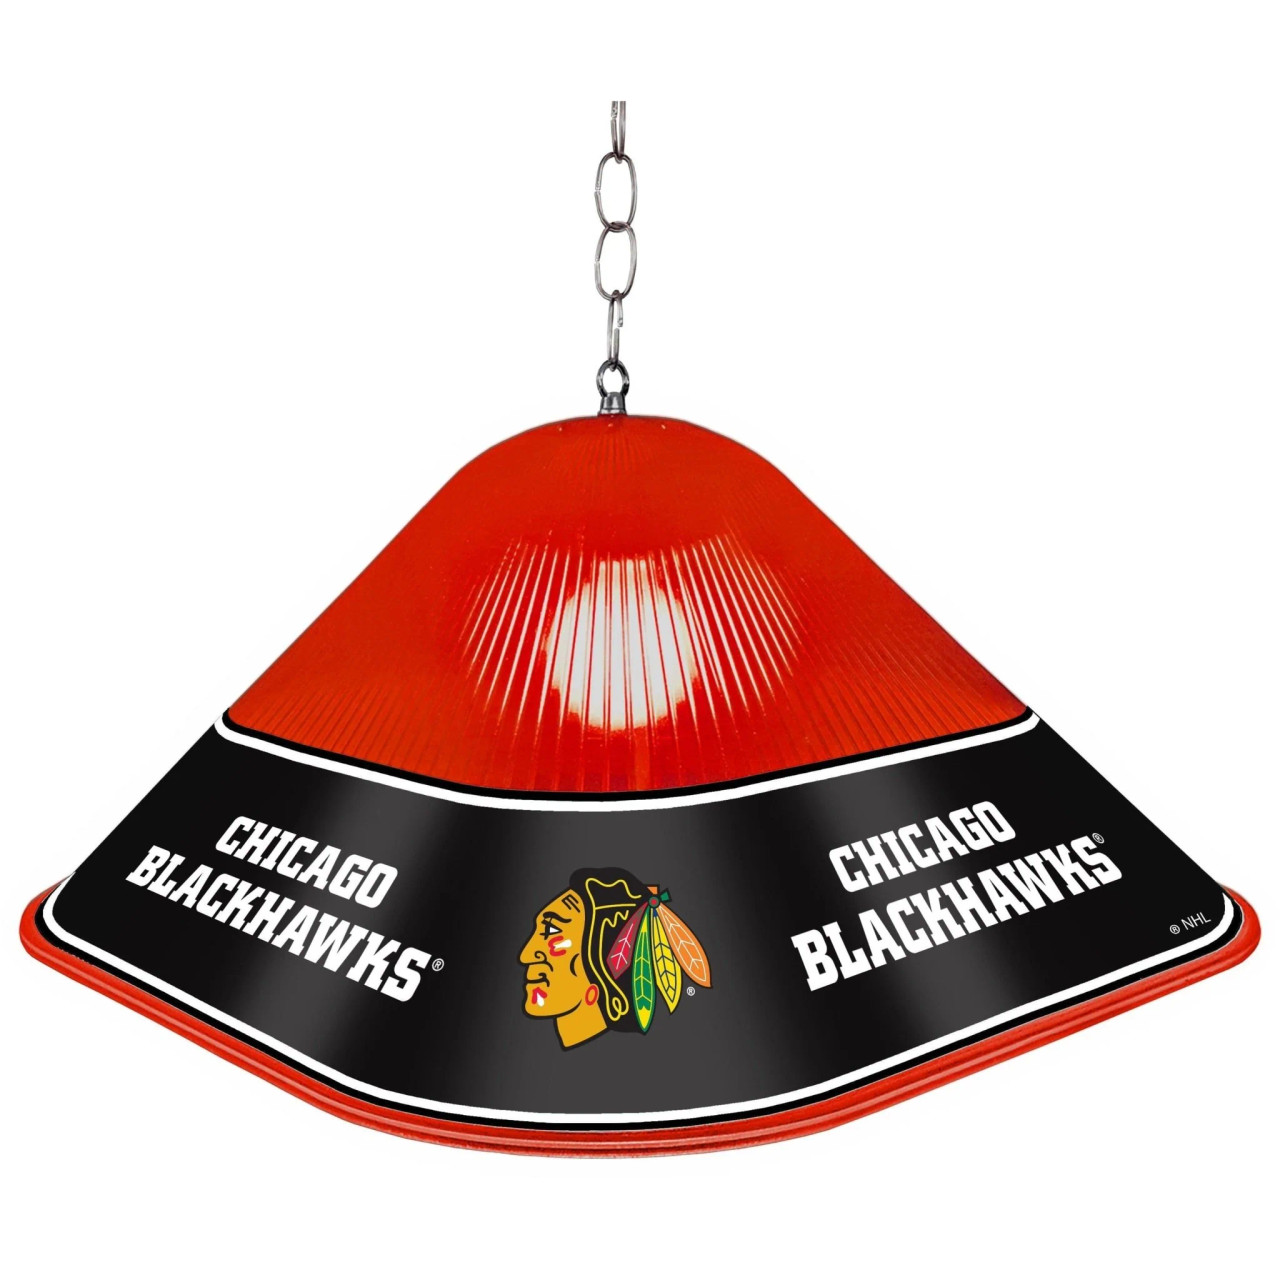 Chicago, CHI, Blackhawks, Game, Table, Light, Lamp, NHCHIC-410-01, The Fan-Brand, NHL, 686878991840